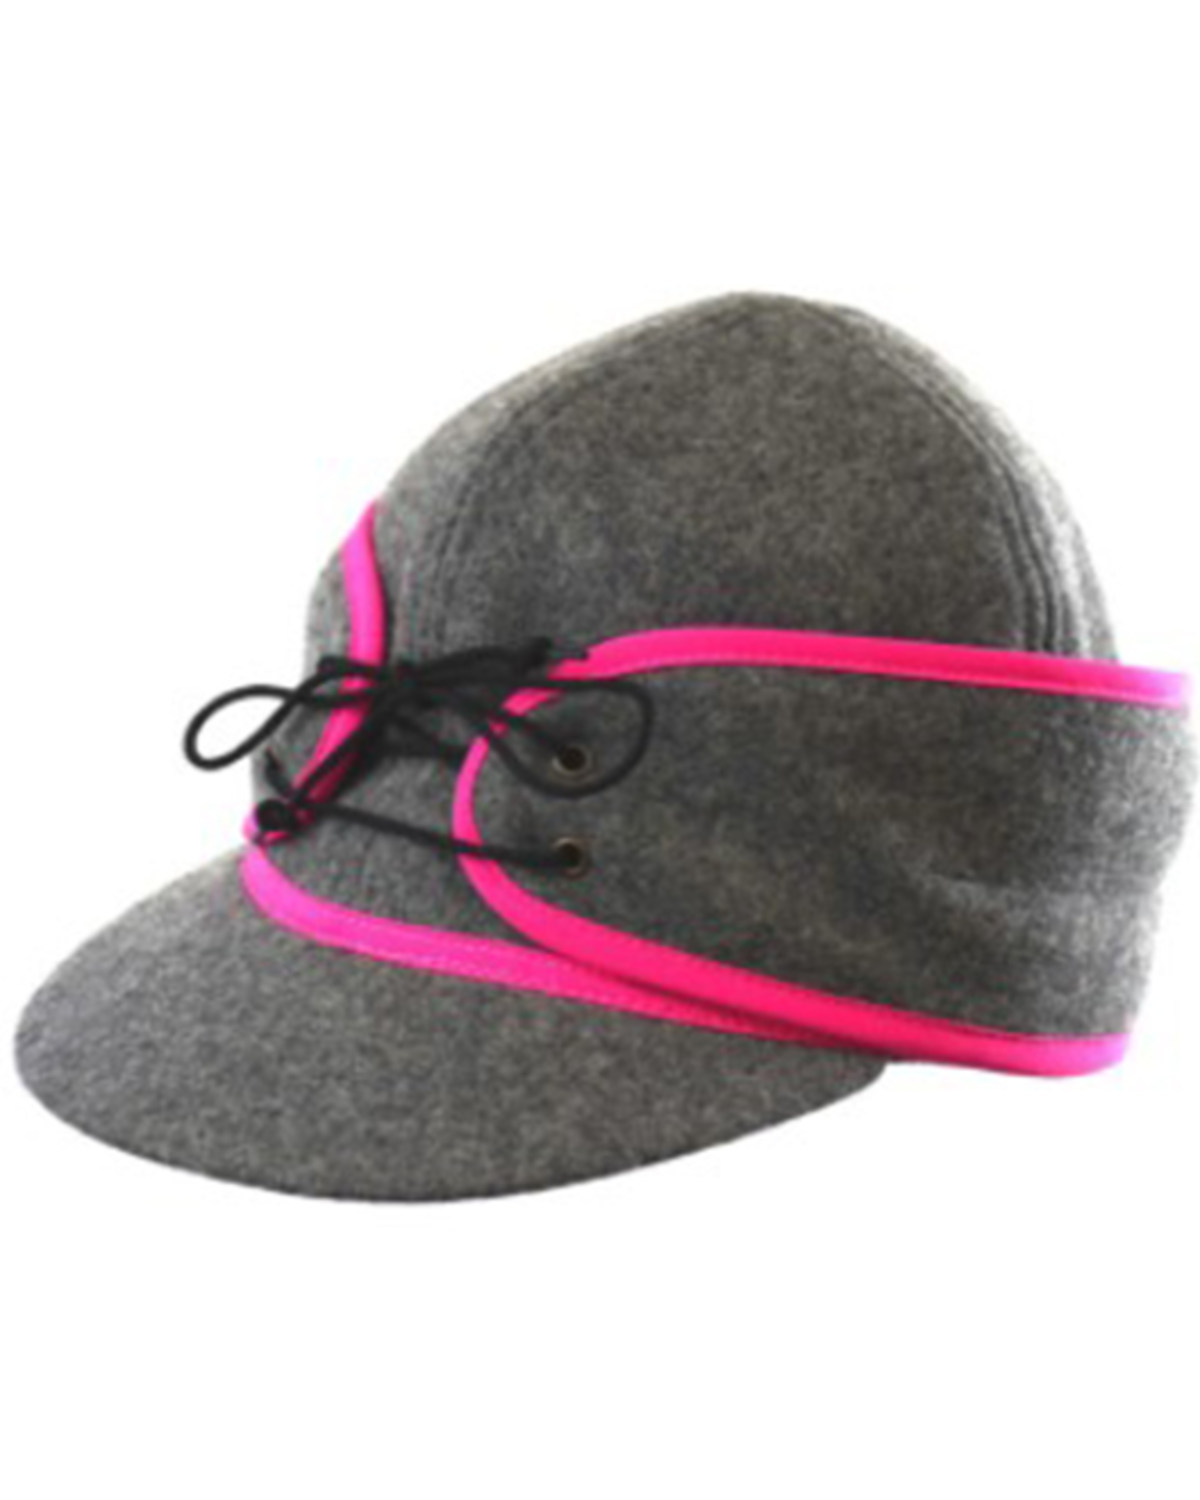 Crown Cap Women's Wool Railroad Ponytail Work Hat